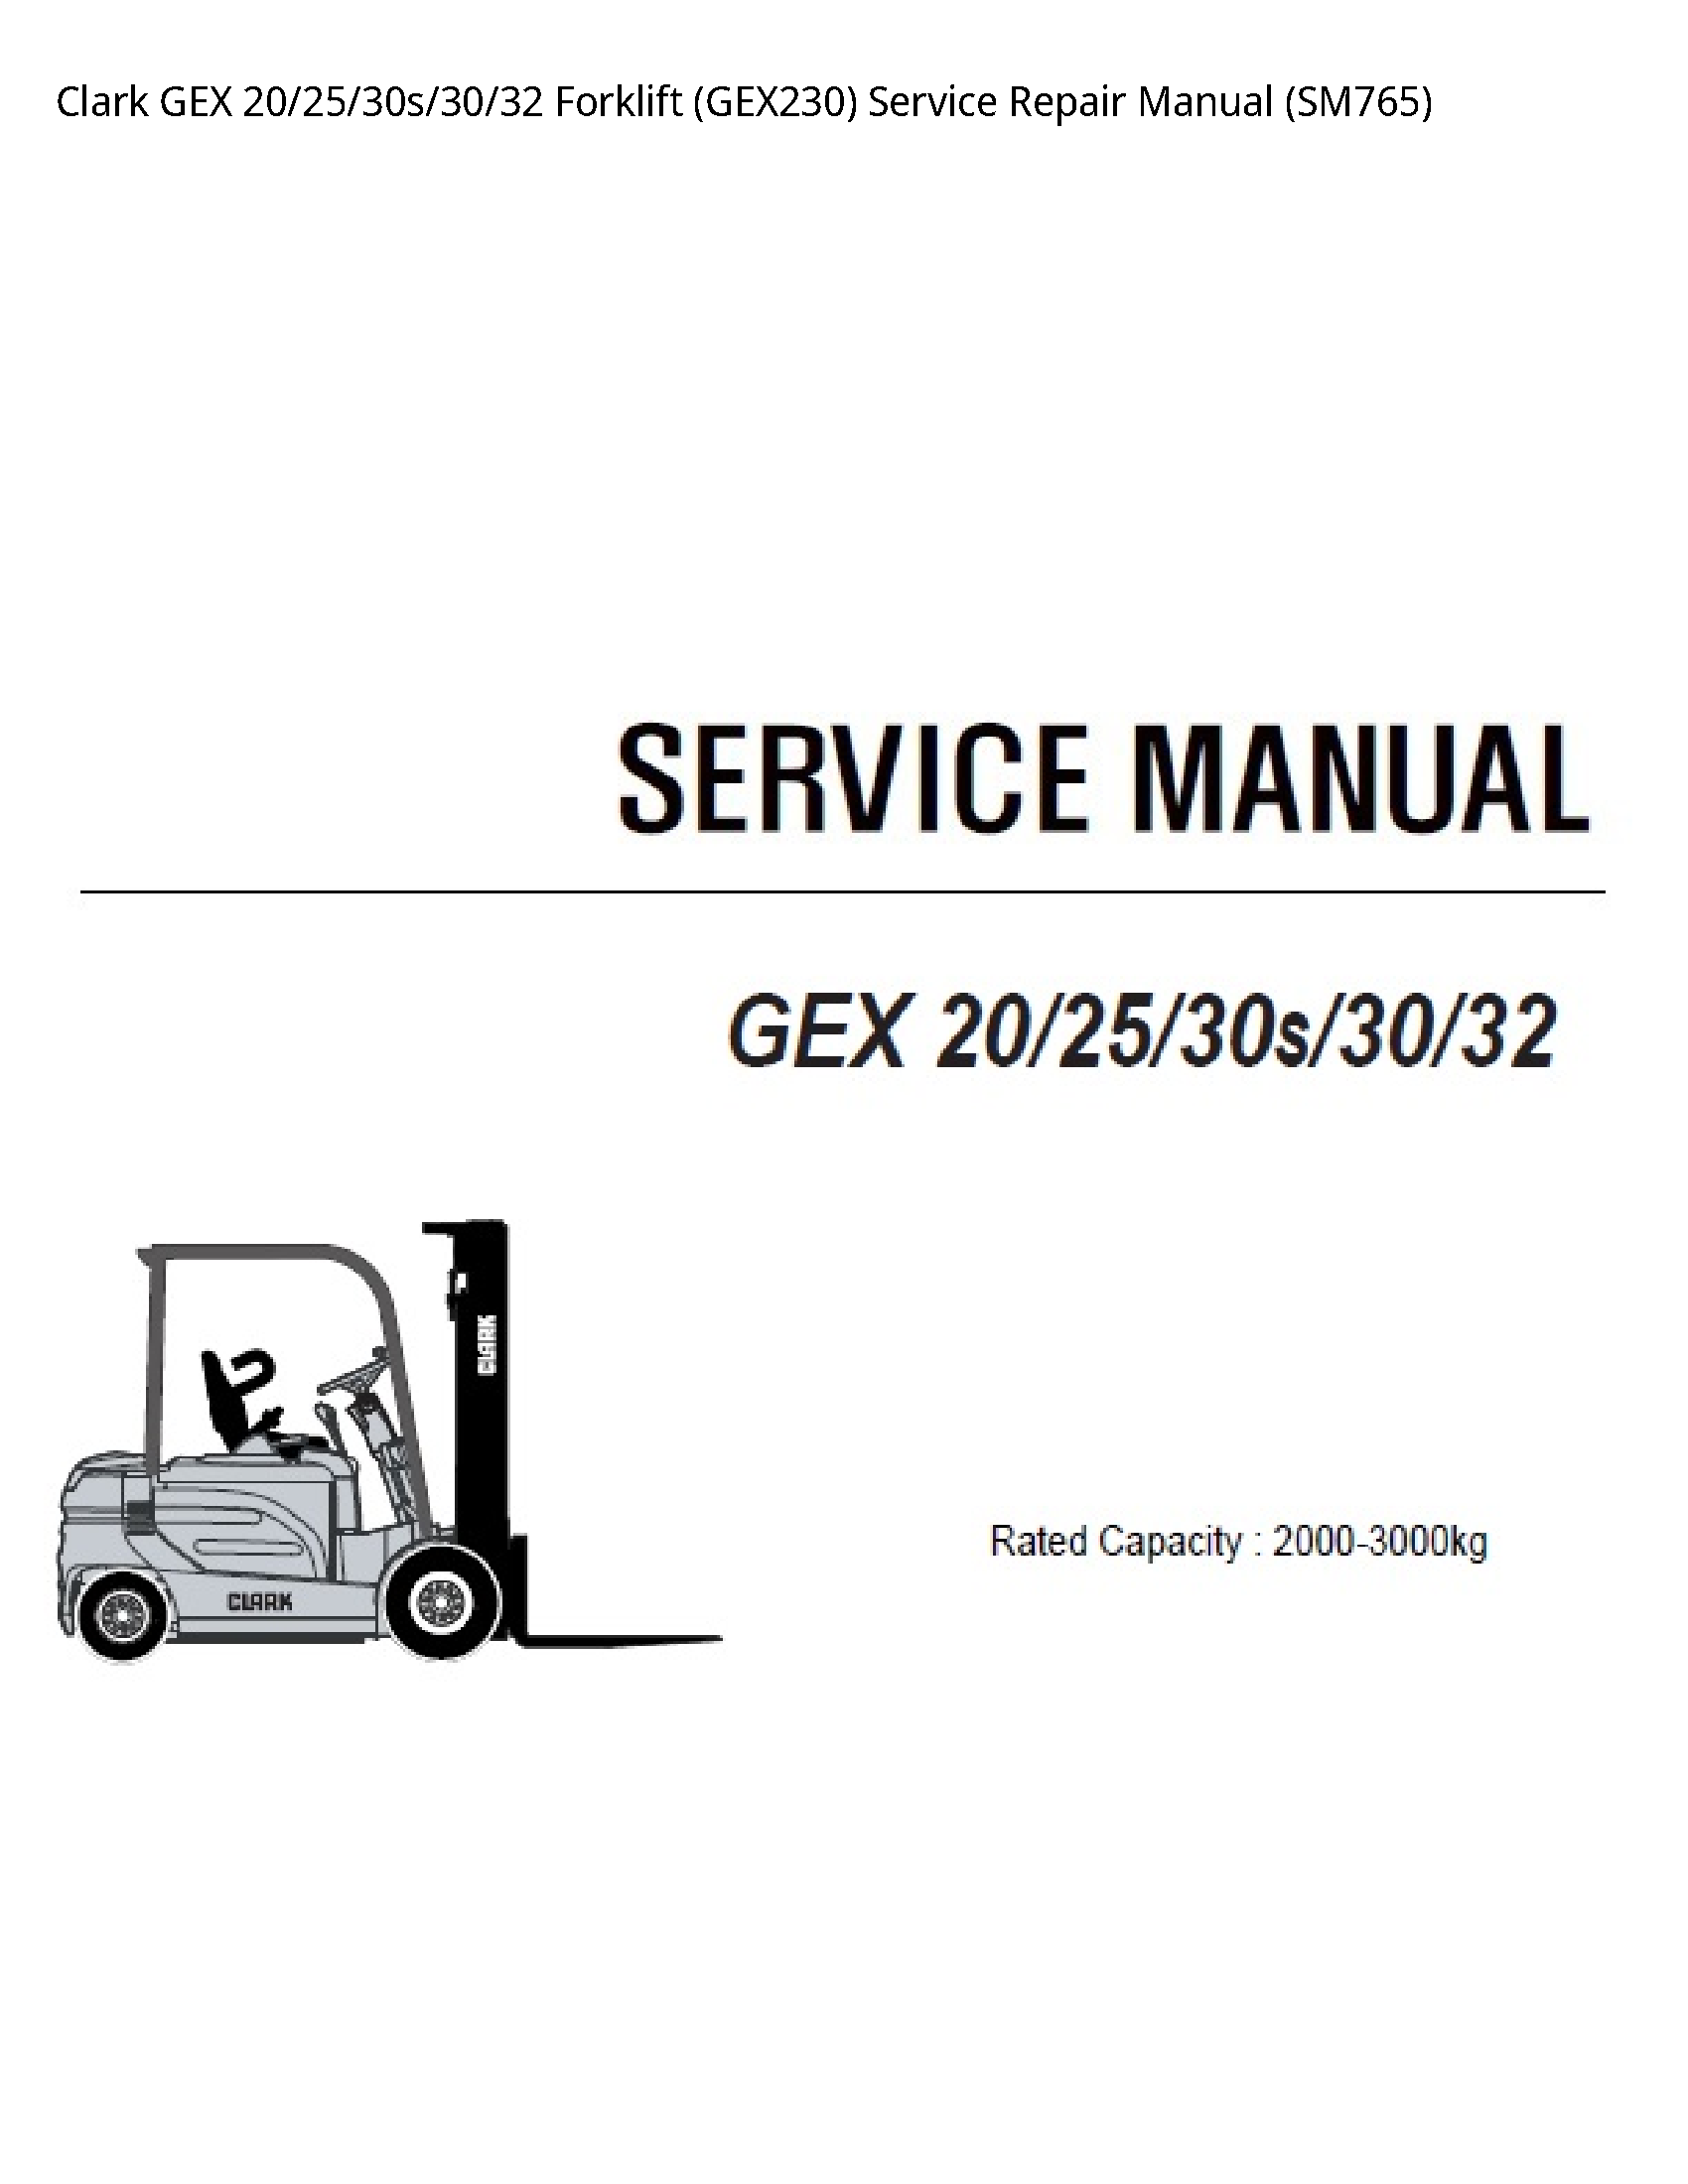 Clark 20 GEX Forklift manual